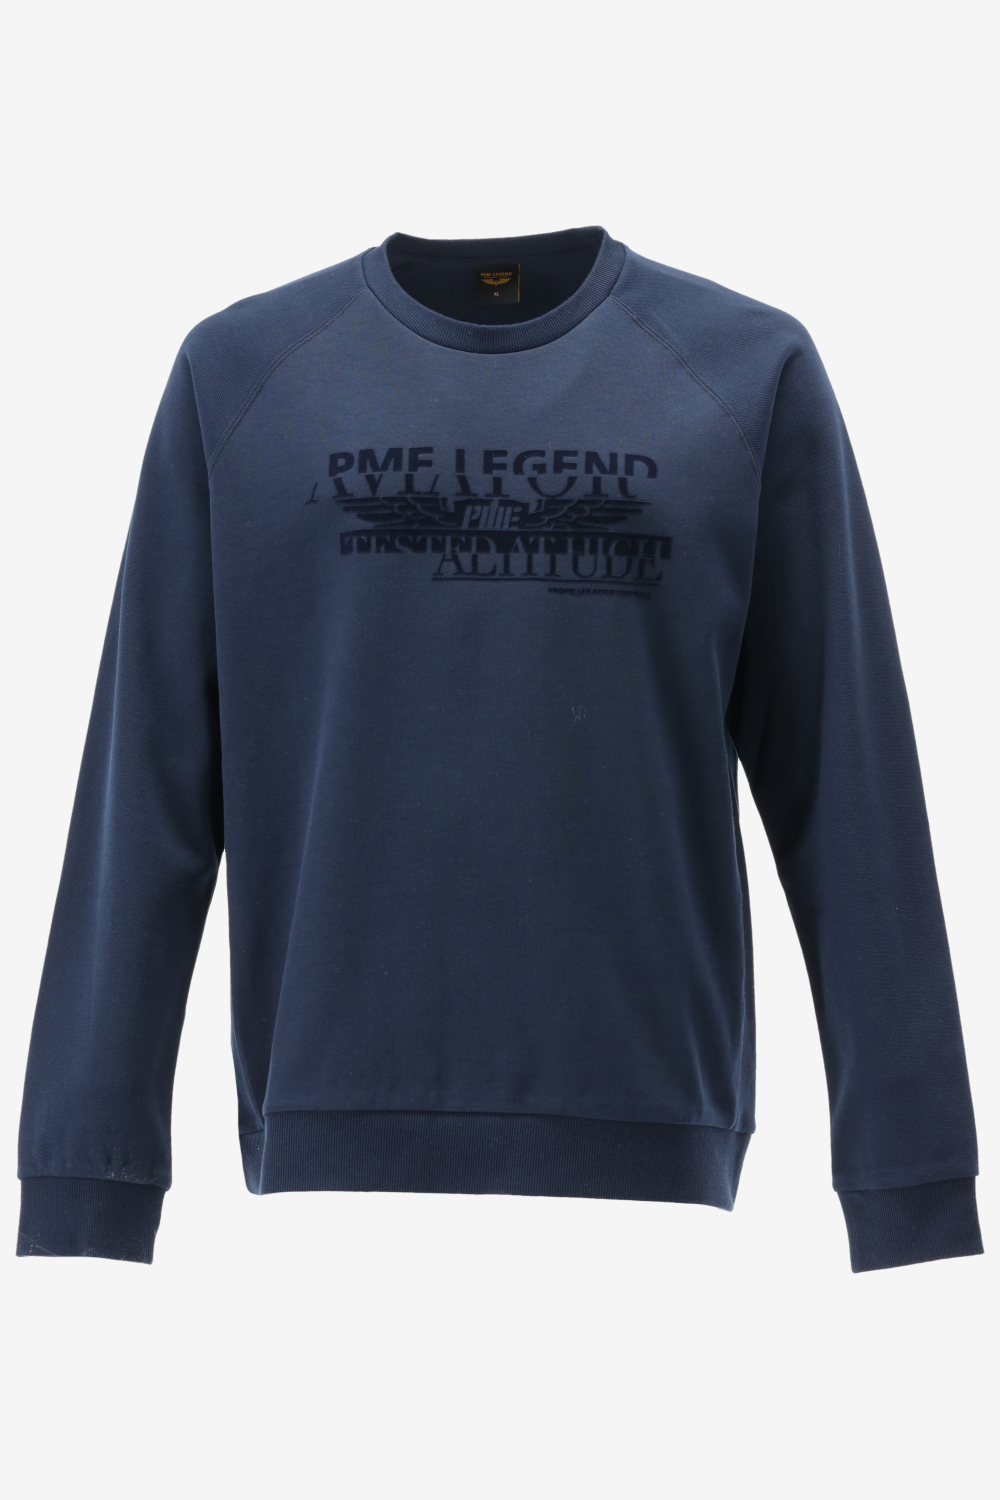 Pme legend sweater maat S